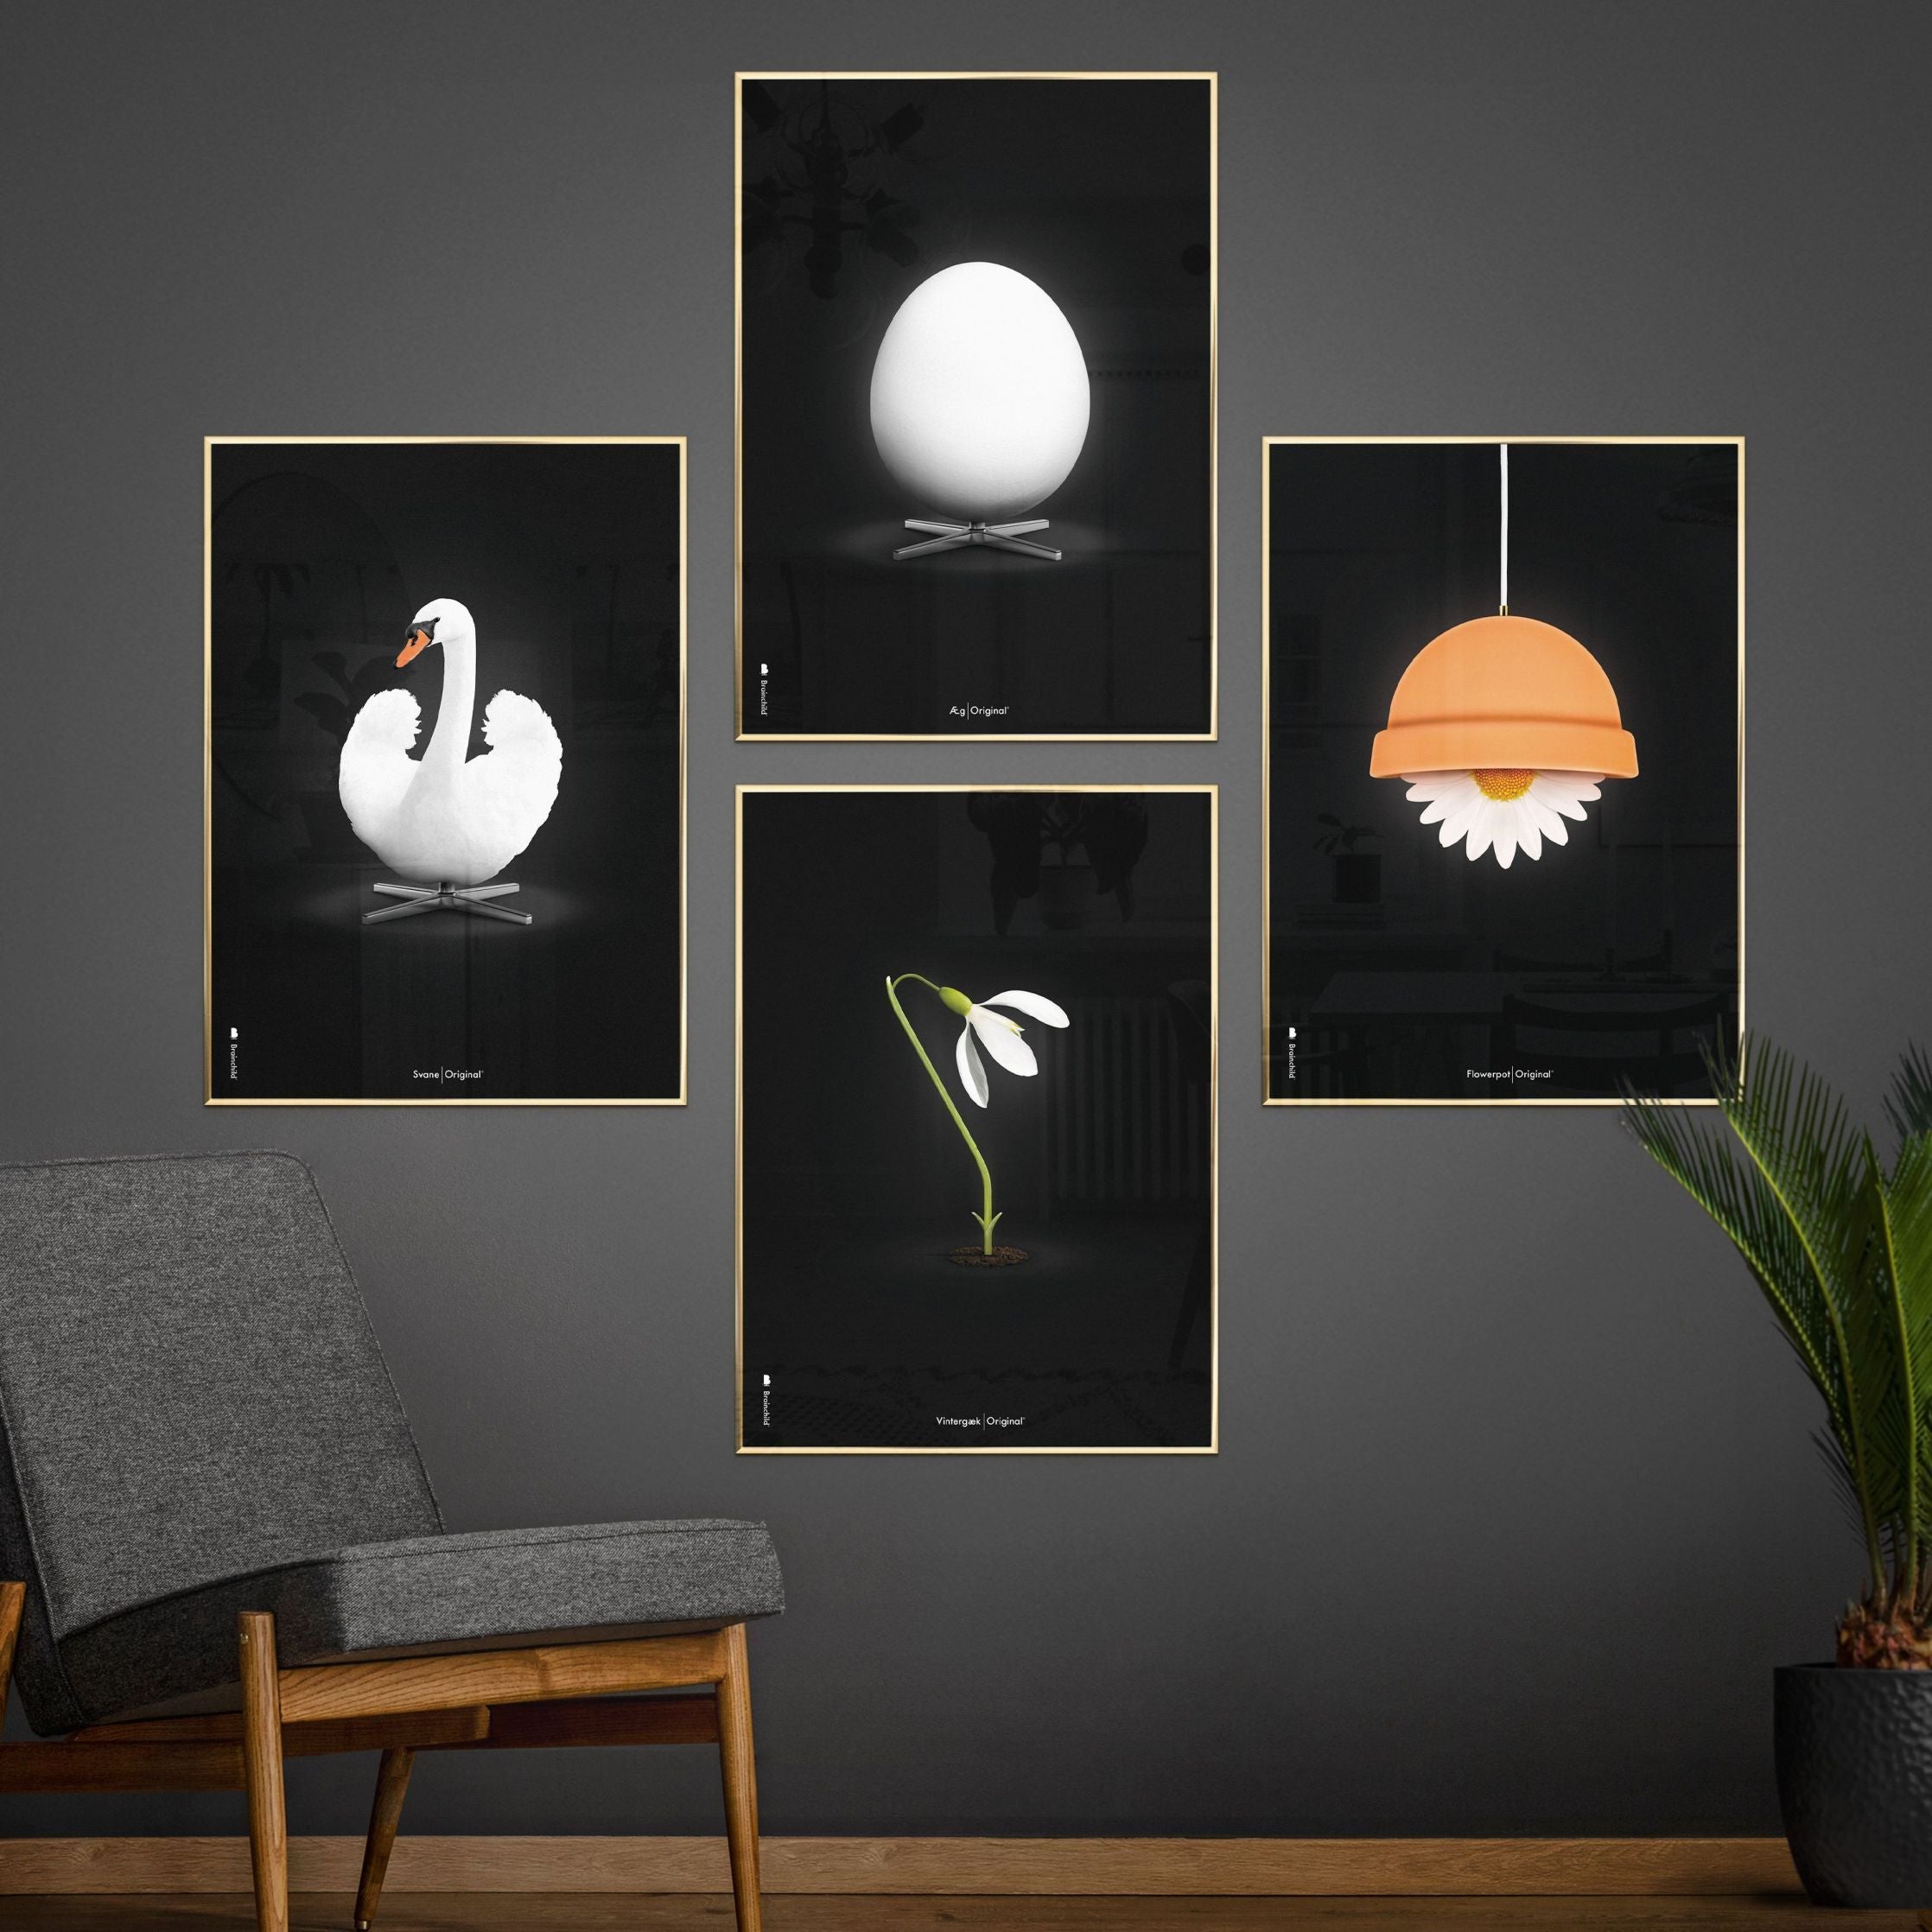 Brainchild Flowerpot Classic Poster, Frame In Black Lacquered Wood 70x100 Cm, Black Background